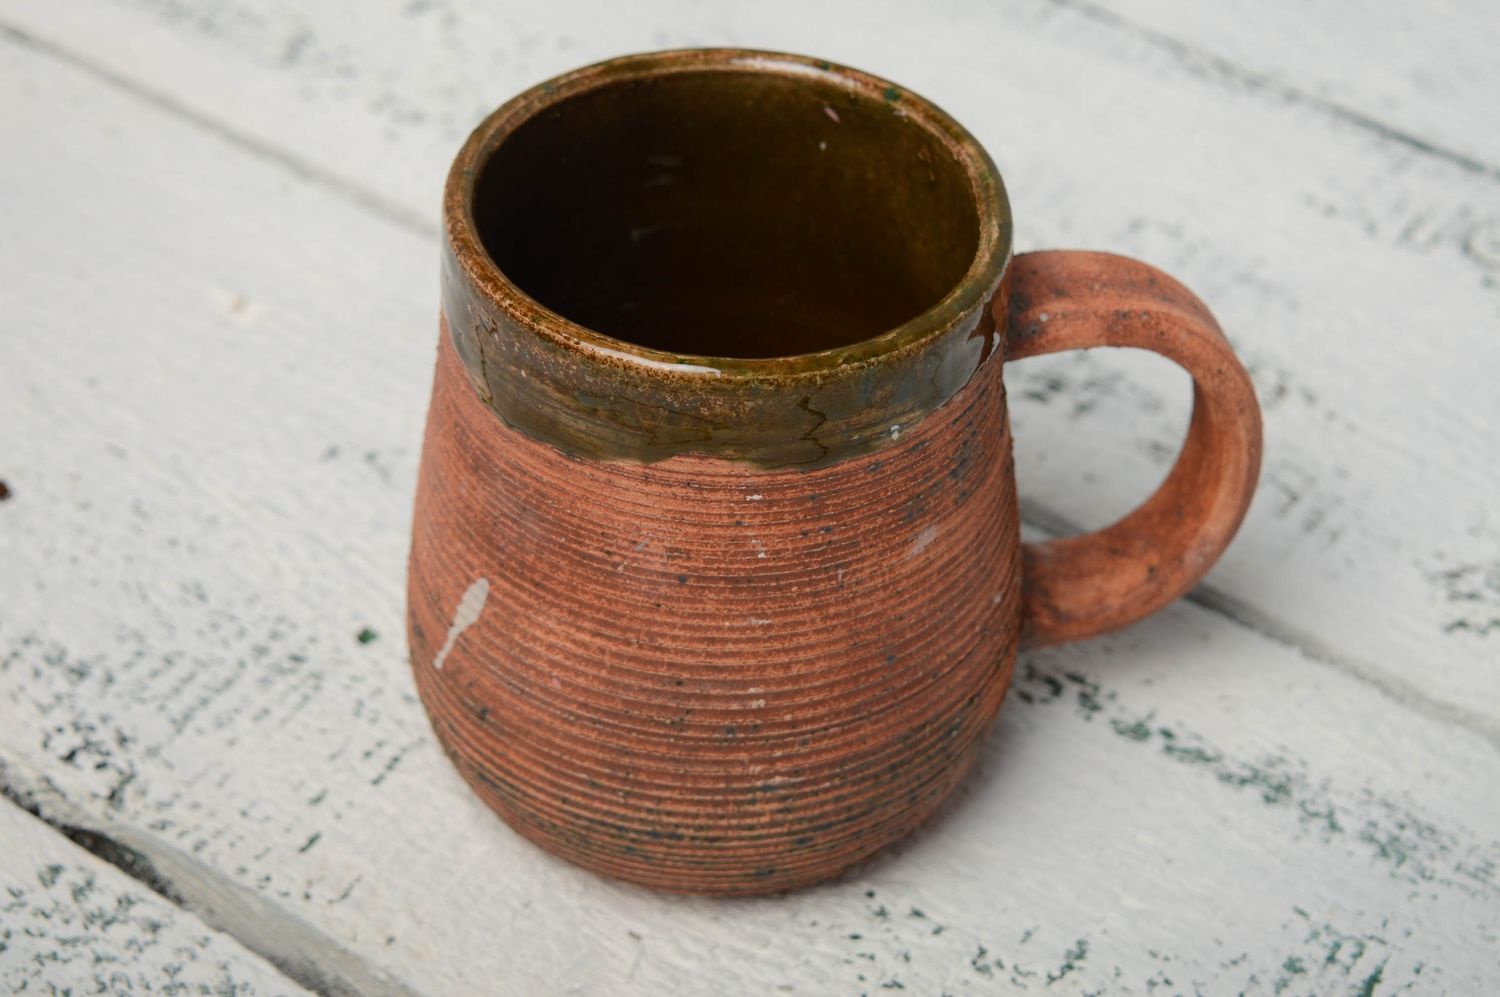 Giant 30 oz ceramic mug dor coffee, tea, beer with handle and rustic style photo 1